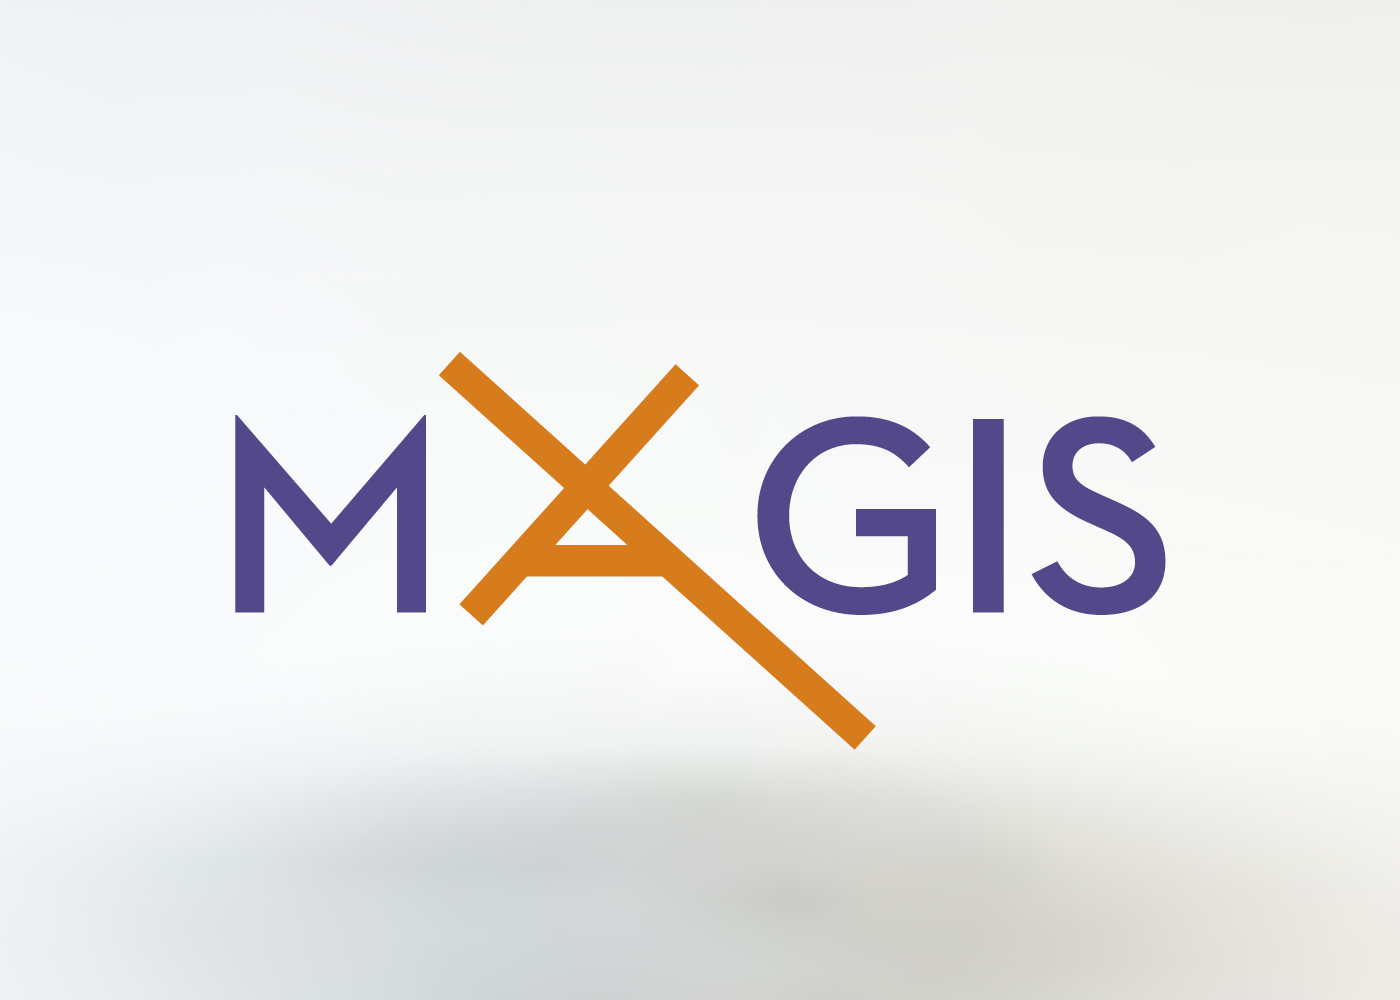 The Visual Identity Design for Magis Organization